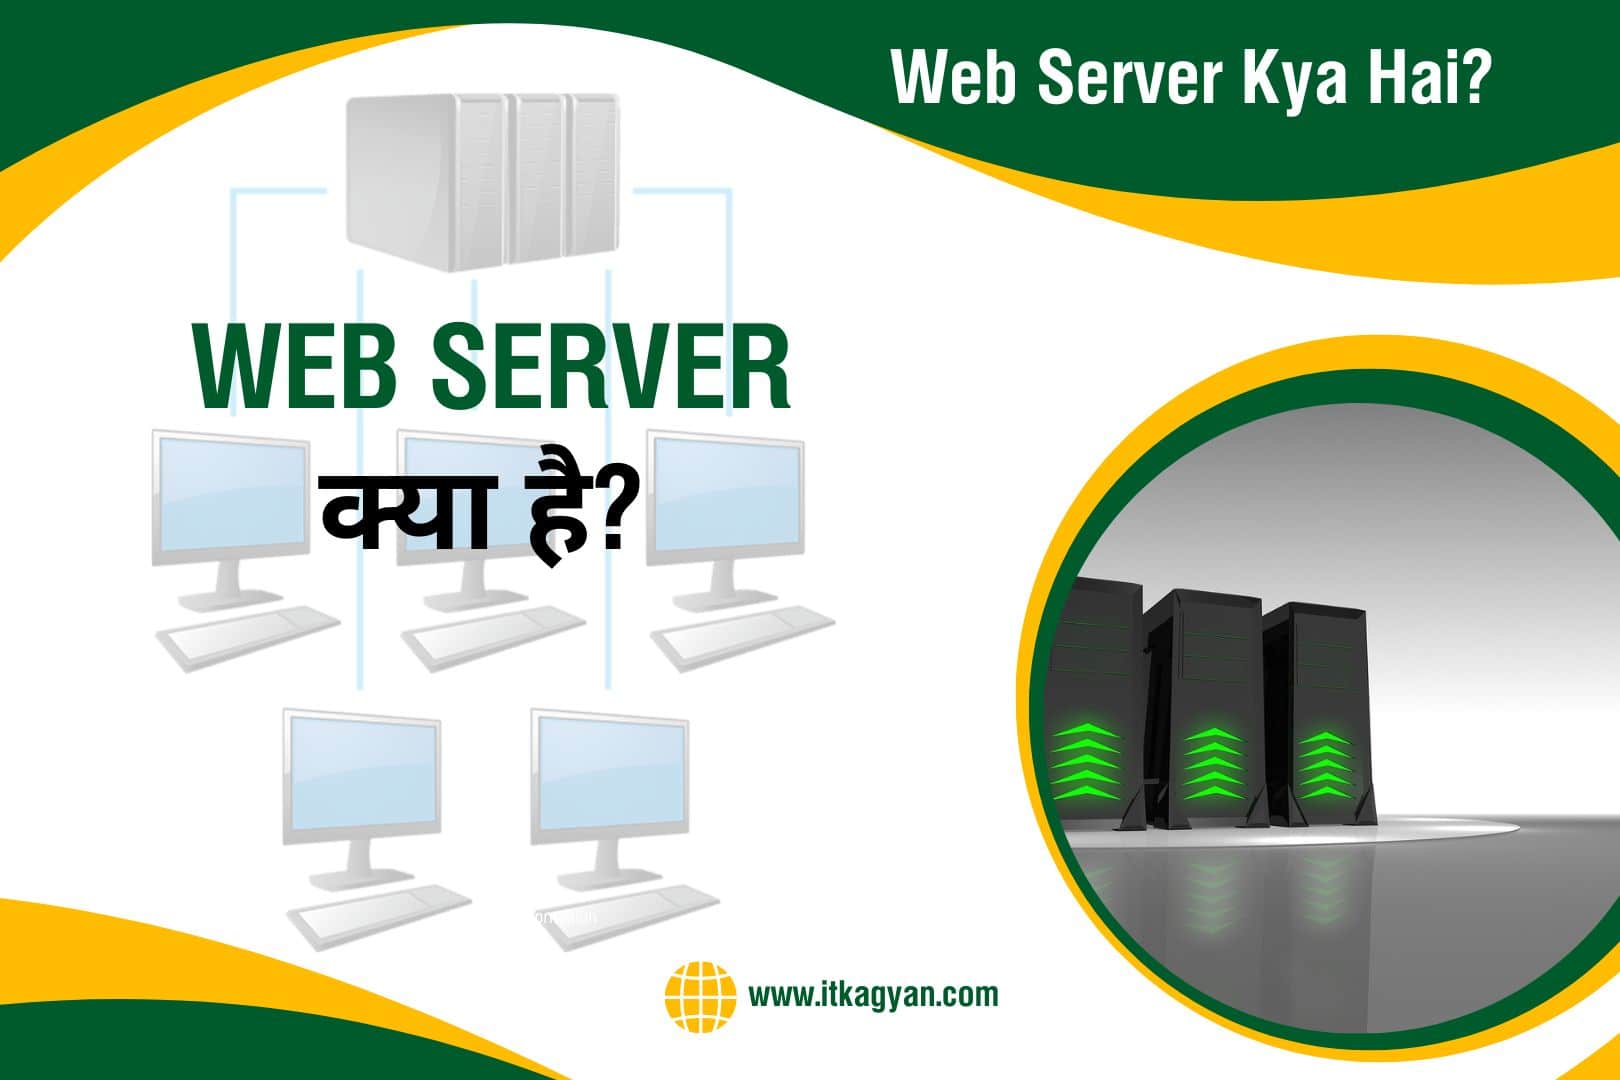 Web Server Kya Hai - What is Web Server in Hindi